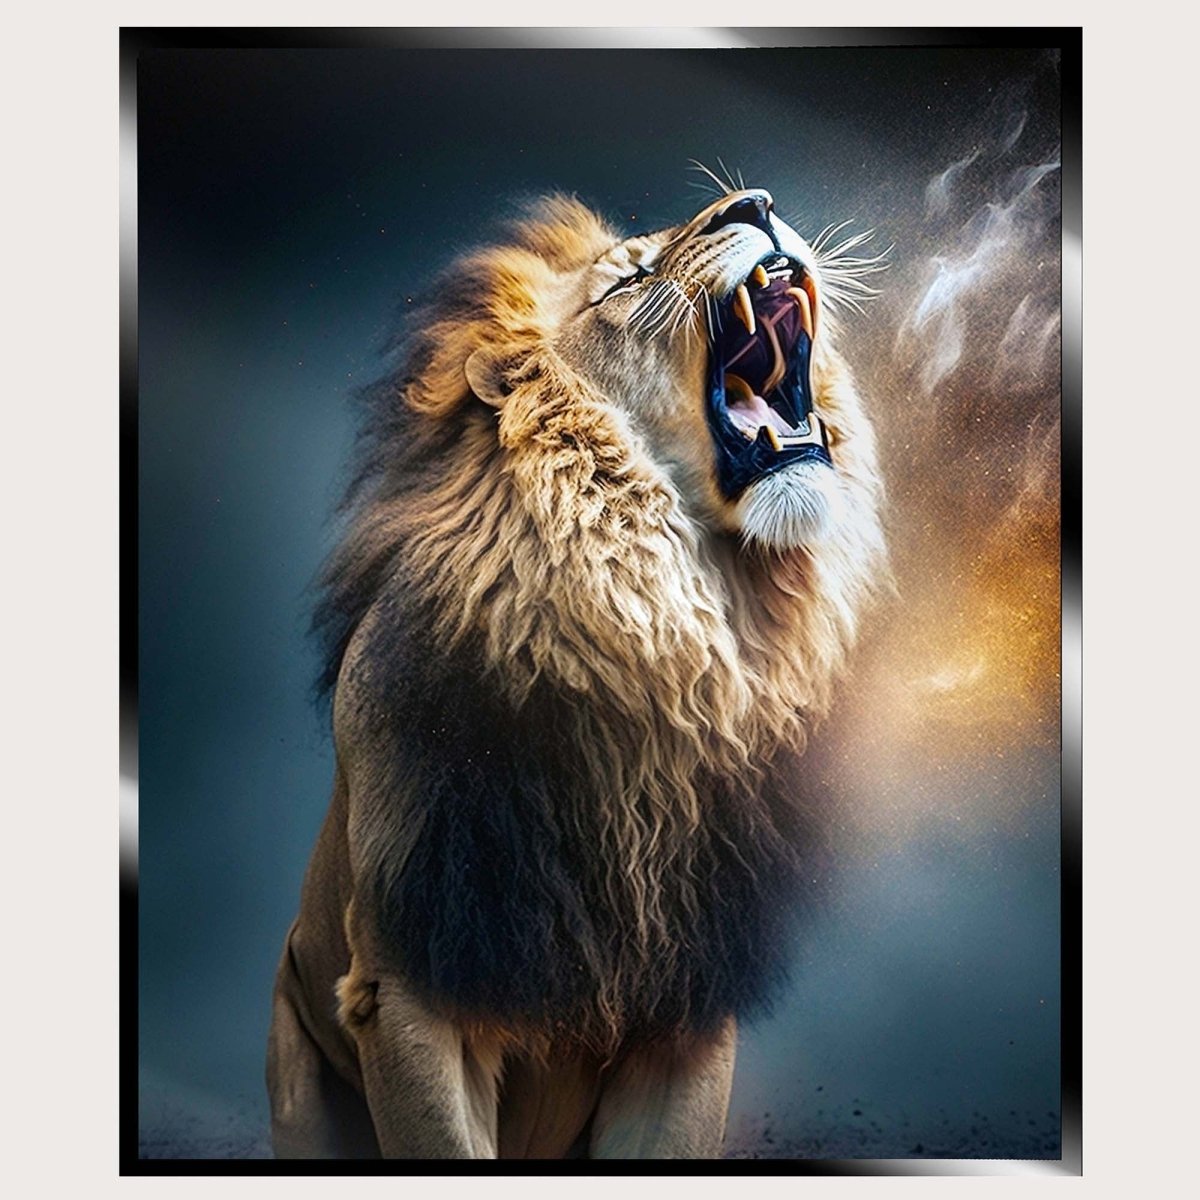 Illuminated Wall Art - Roaring Lion - madaboutneon